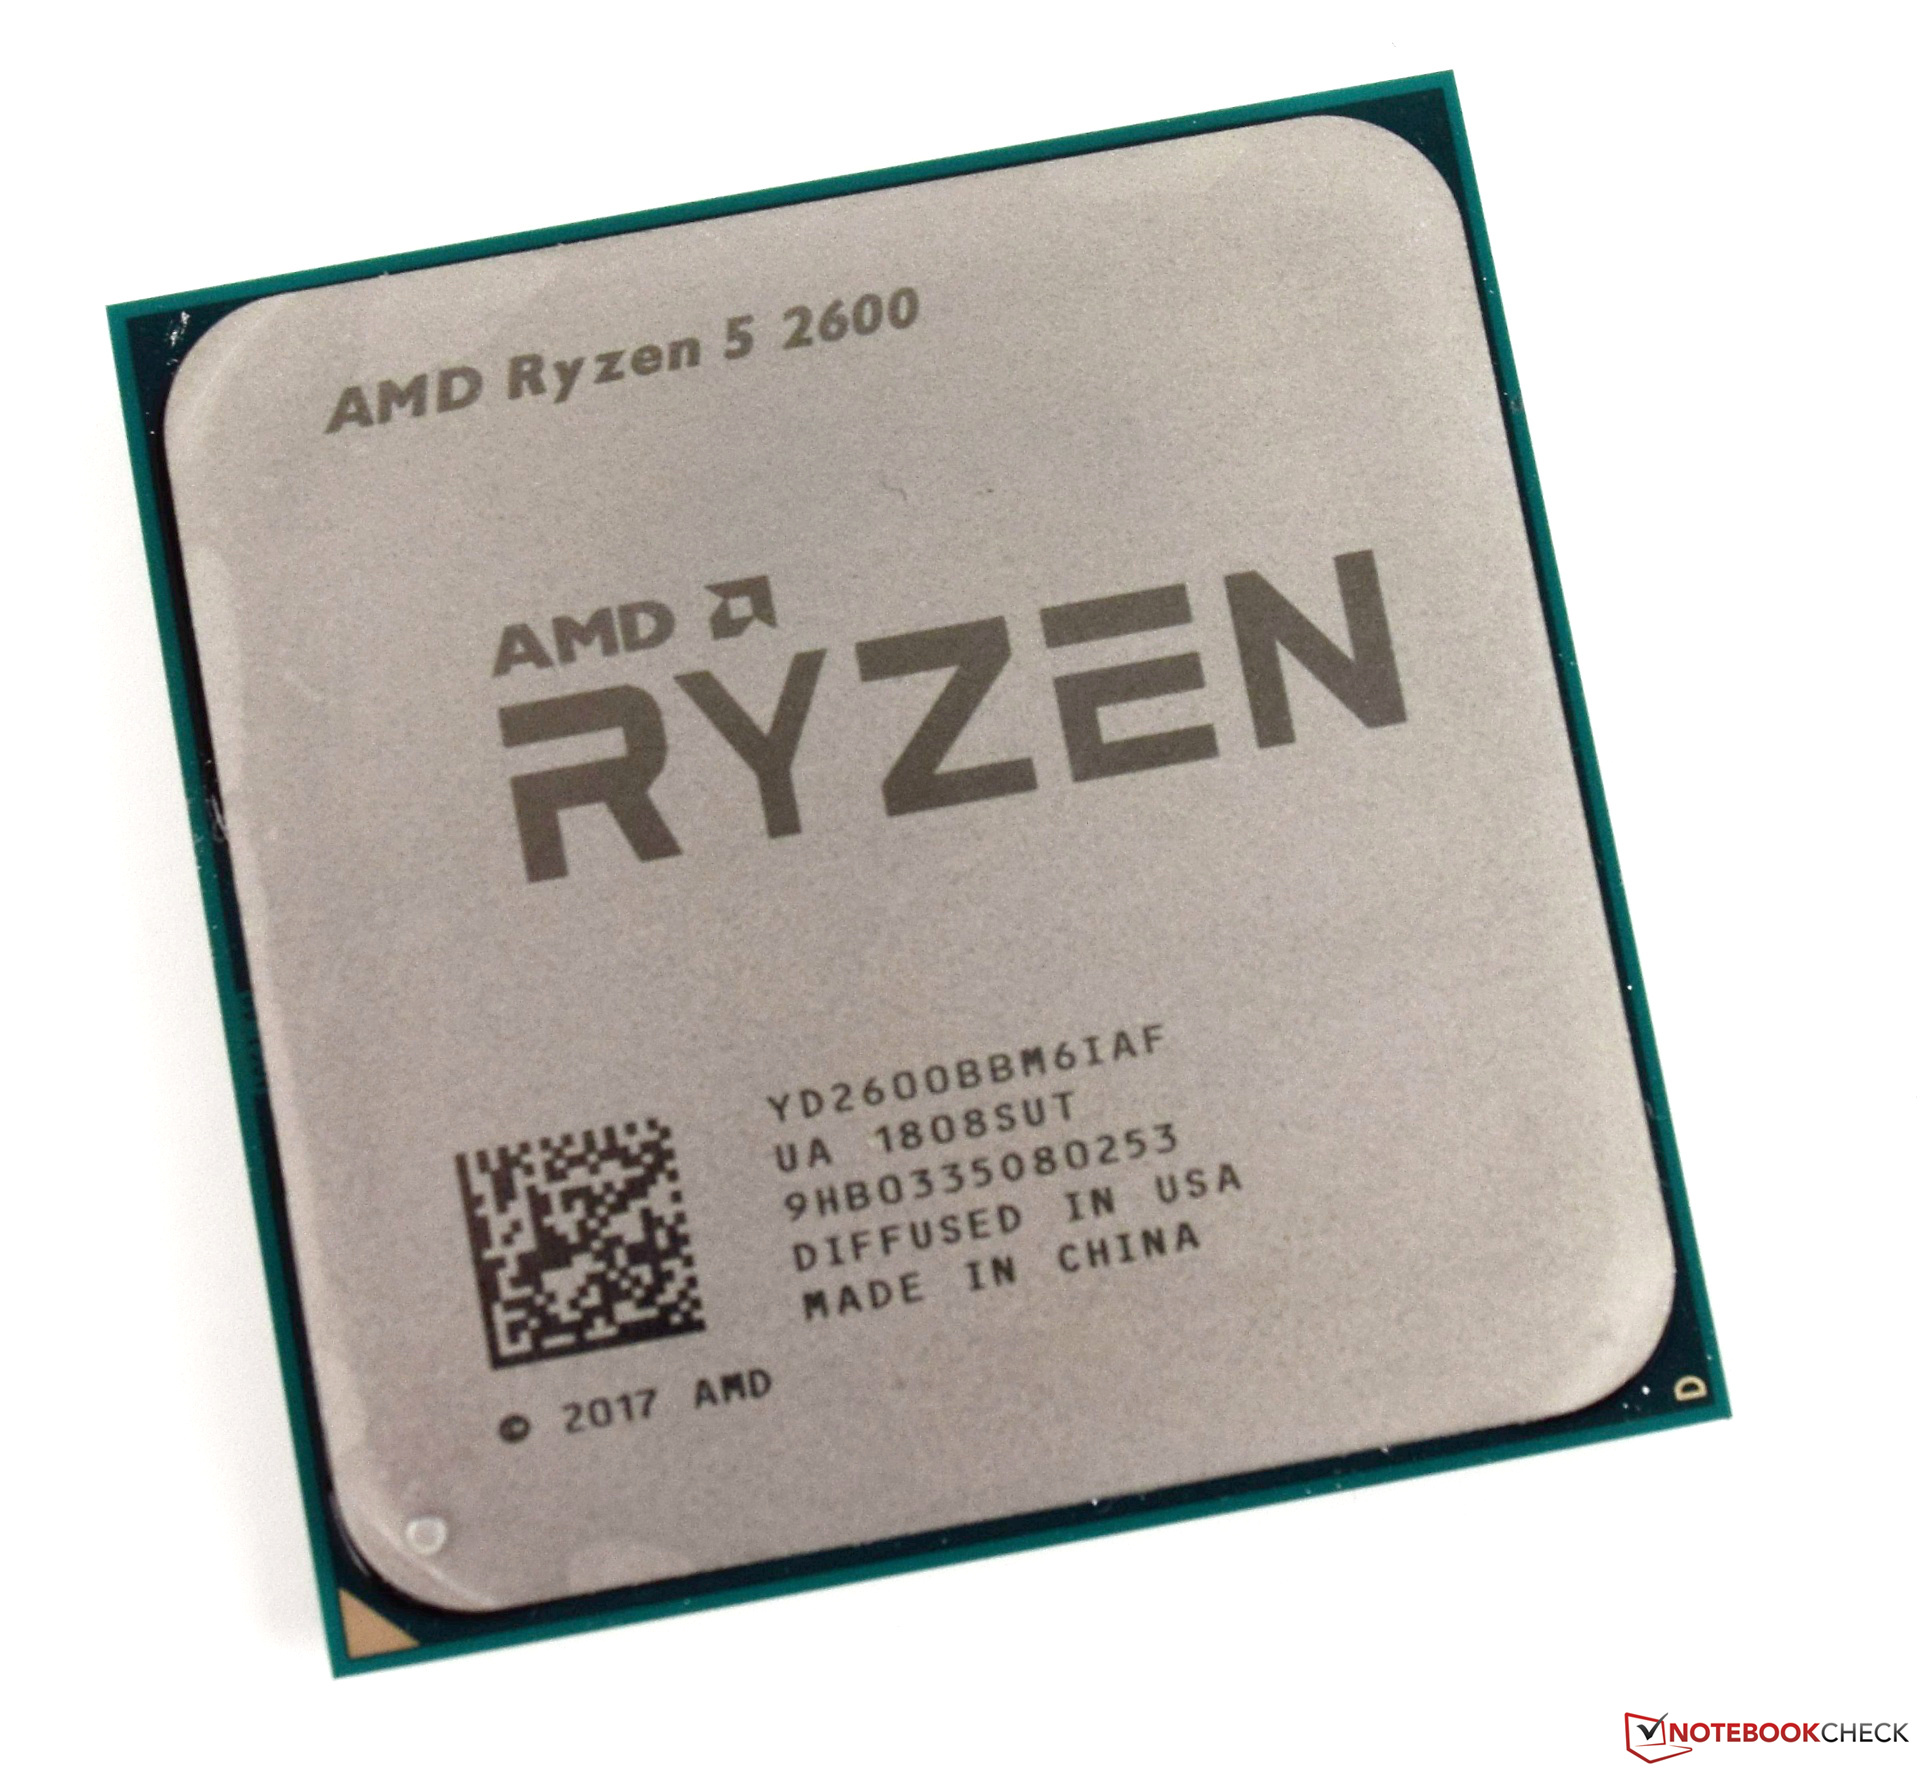 AMD Ryzen 5 2600 SoC - Benchmarks and Specs - NotebookCheck.net Tech